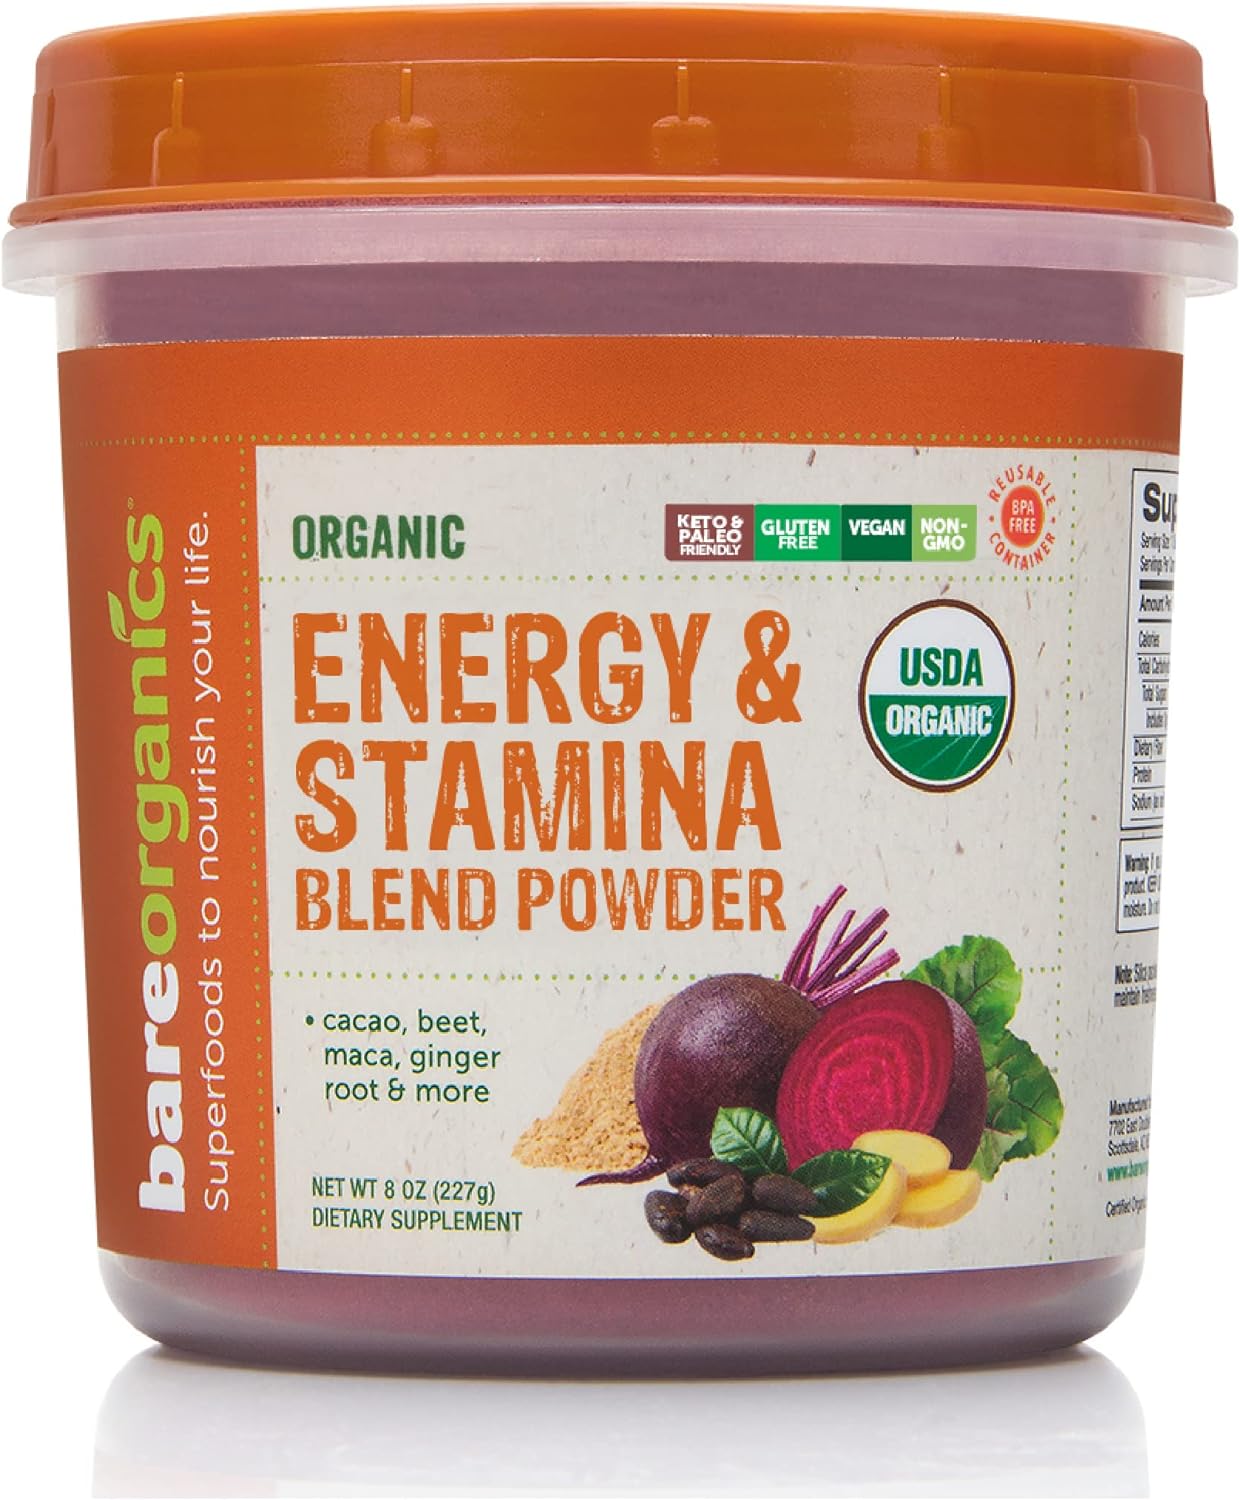 BareOrganics Energy & Stamina Blend Powder, Organic Superfood, Vegan D